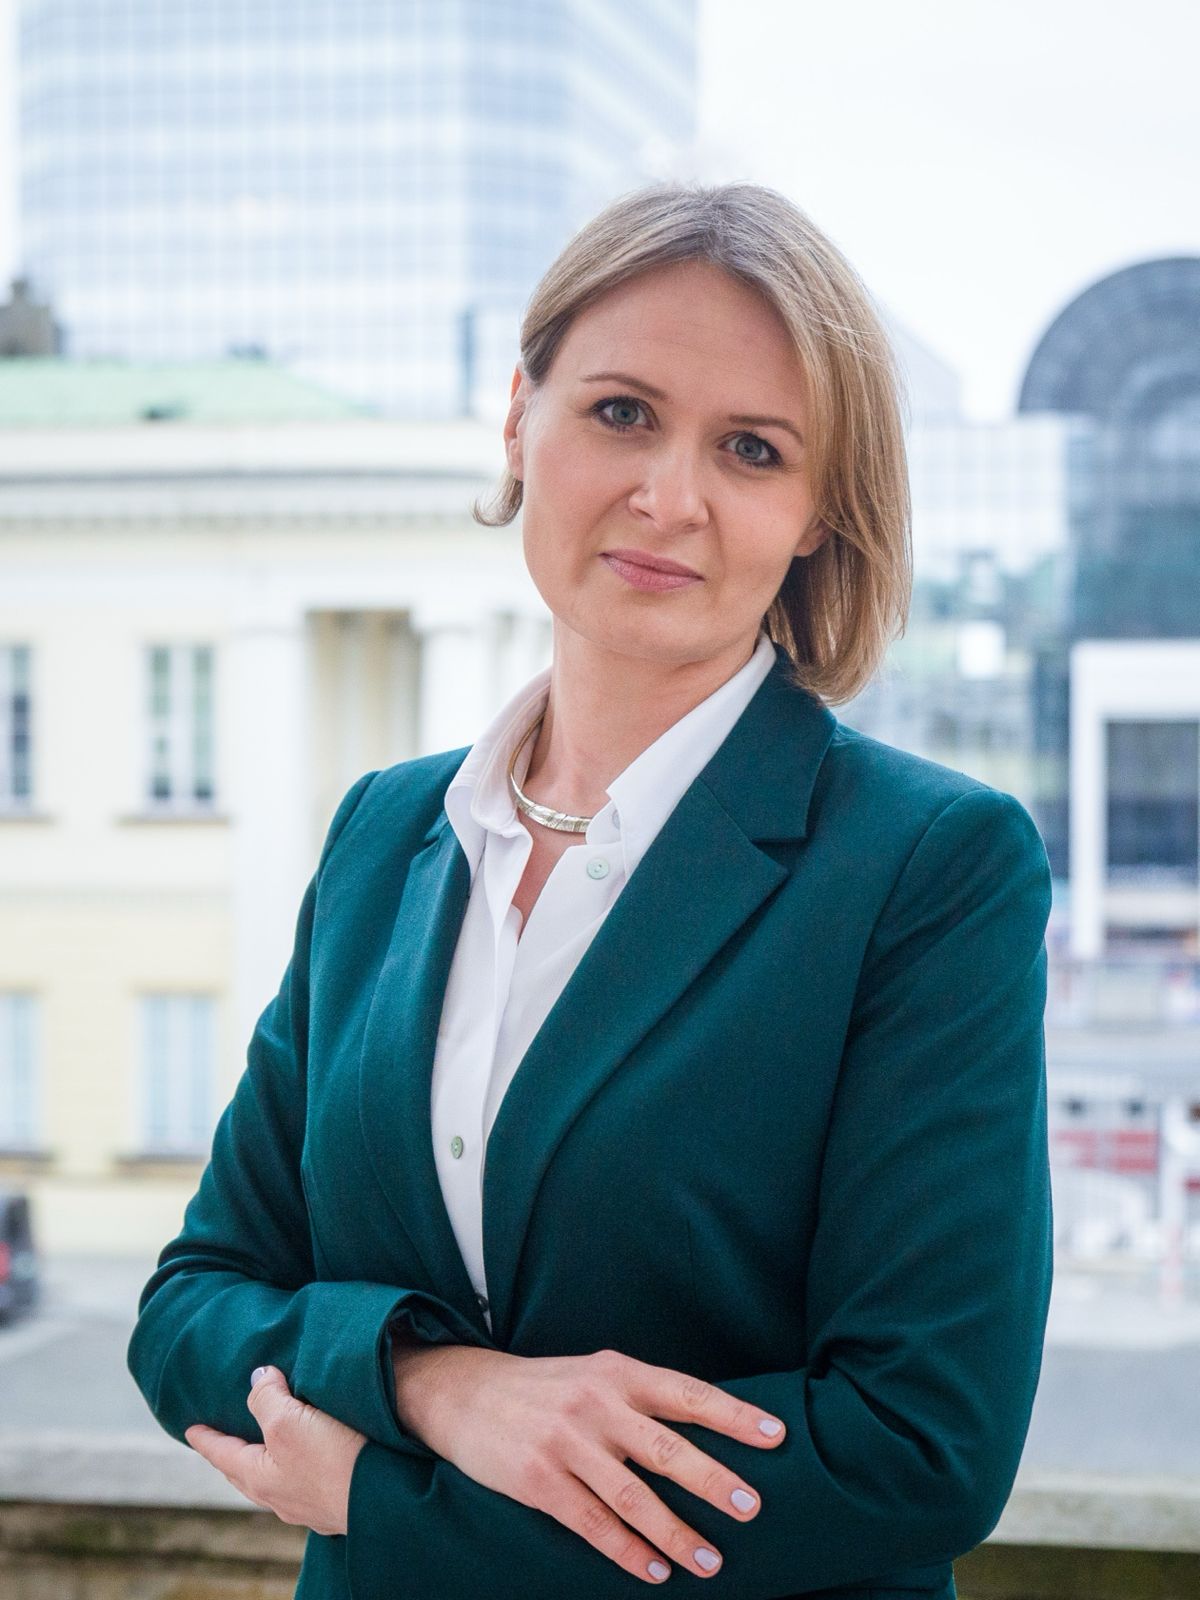 Karolina Zdrodowska, the Director Coordinator for Business and Social Dialogue at the City of Warsaw